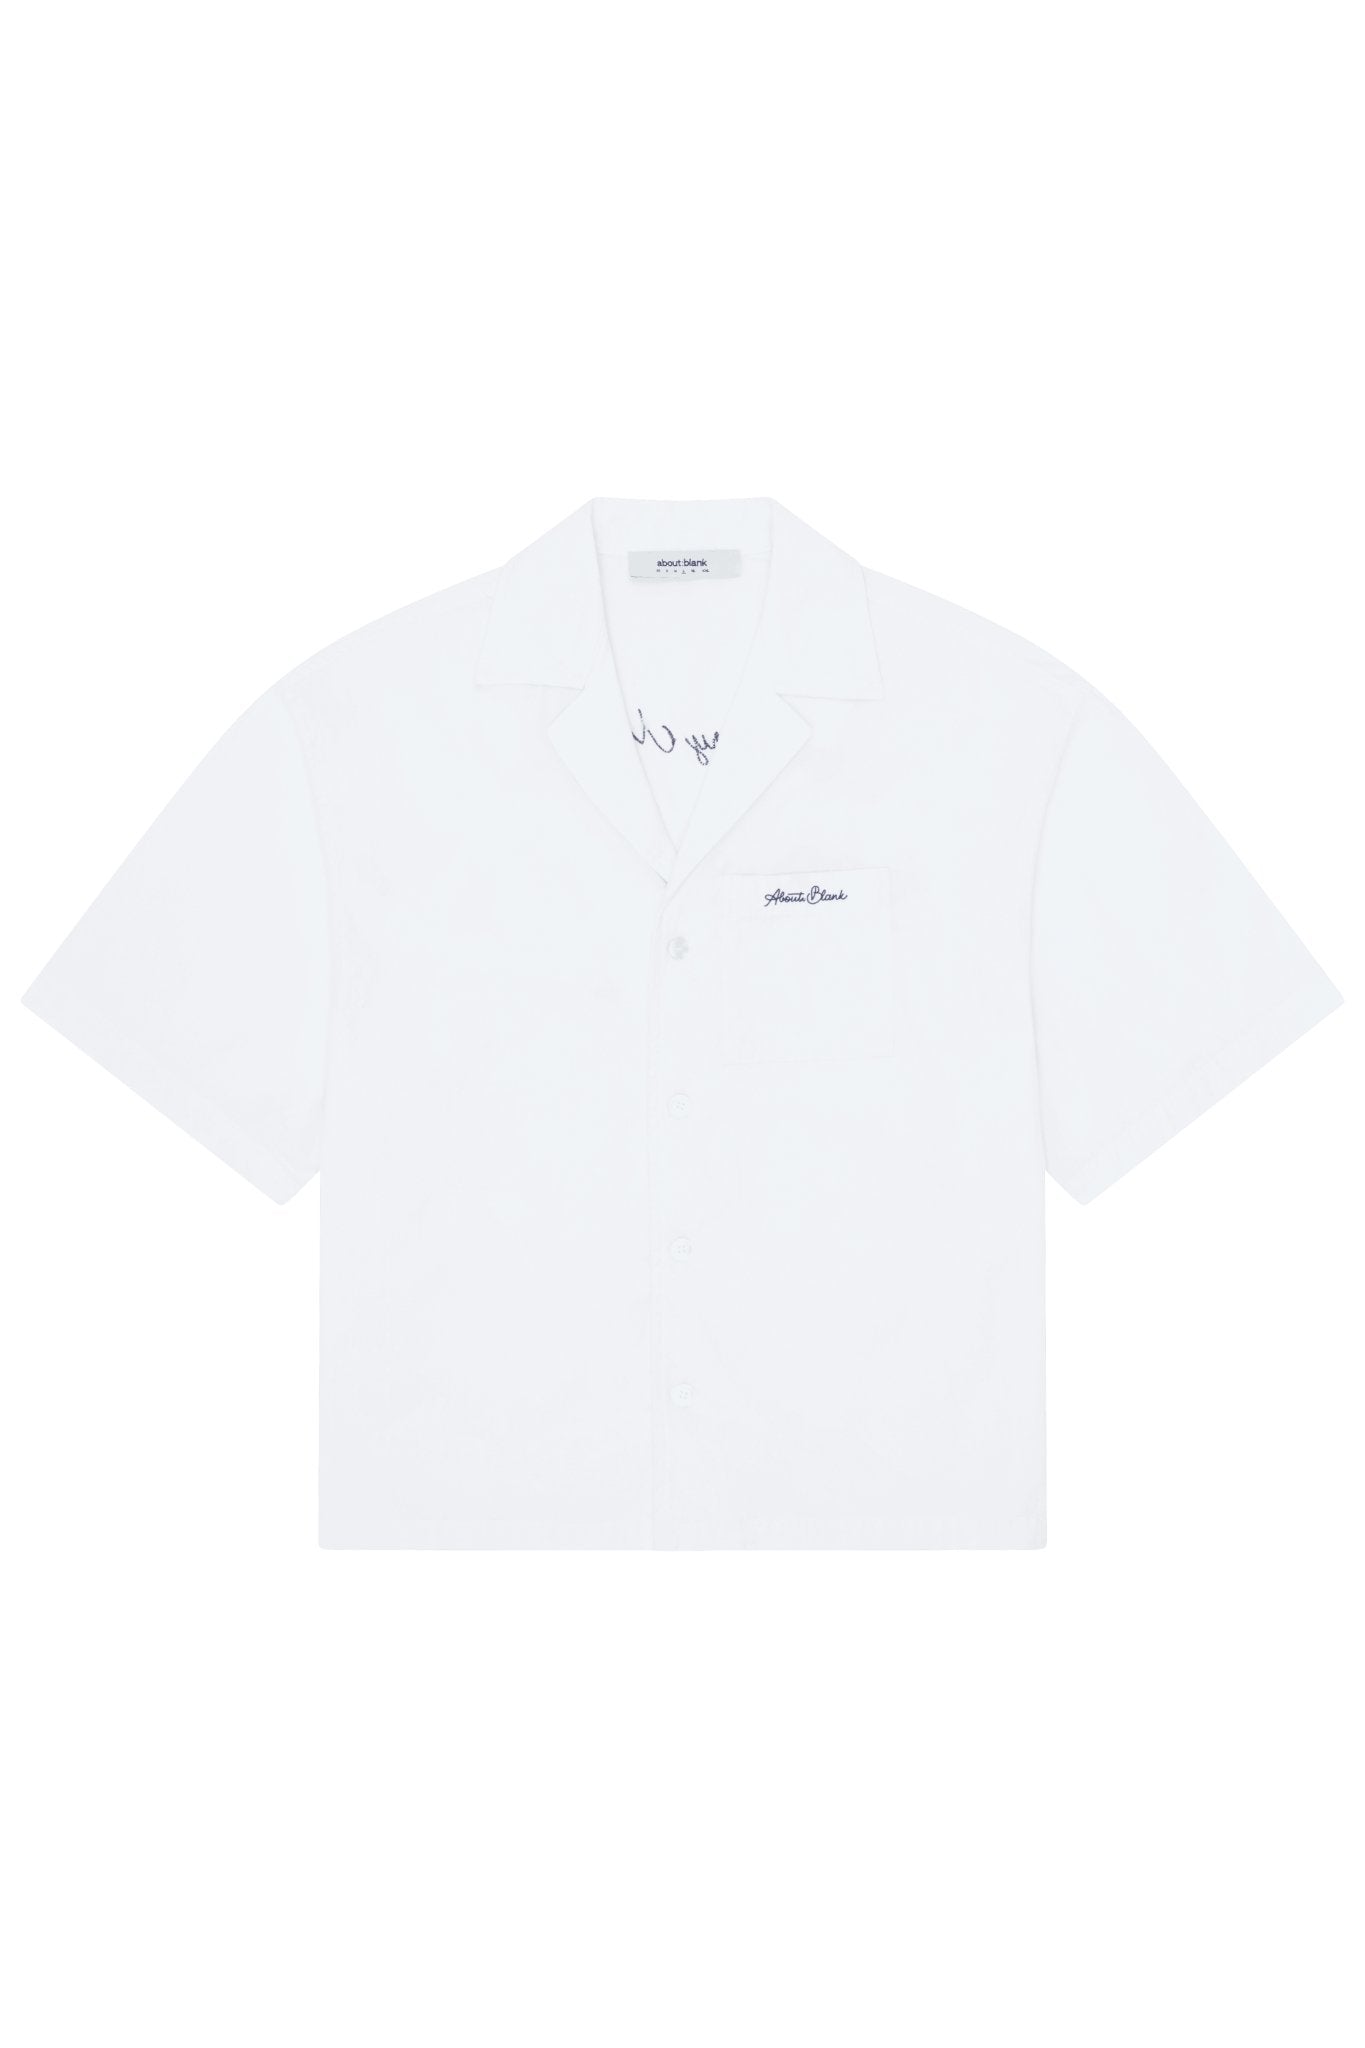 about---blank.comchain stitch resort shirt white